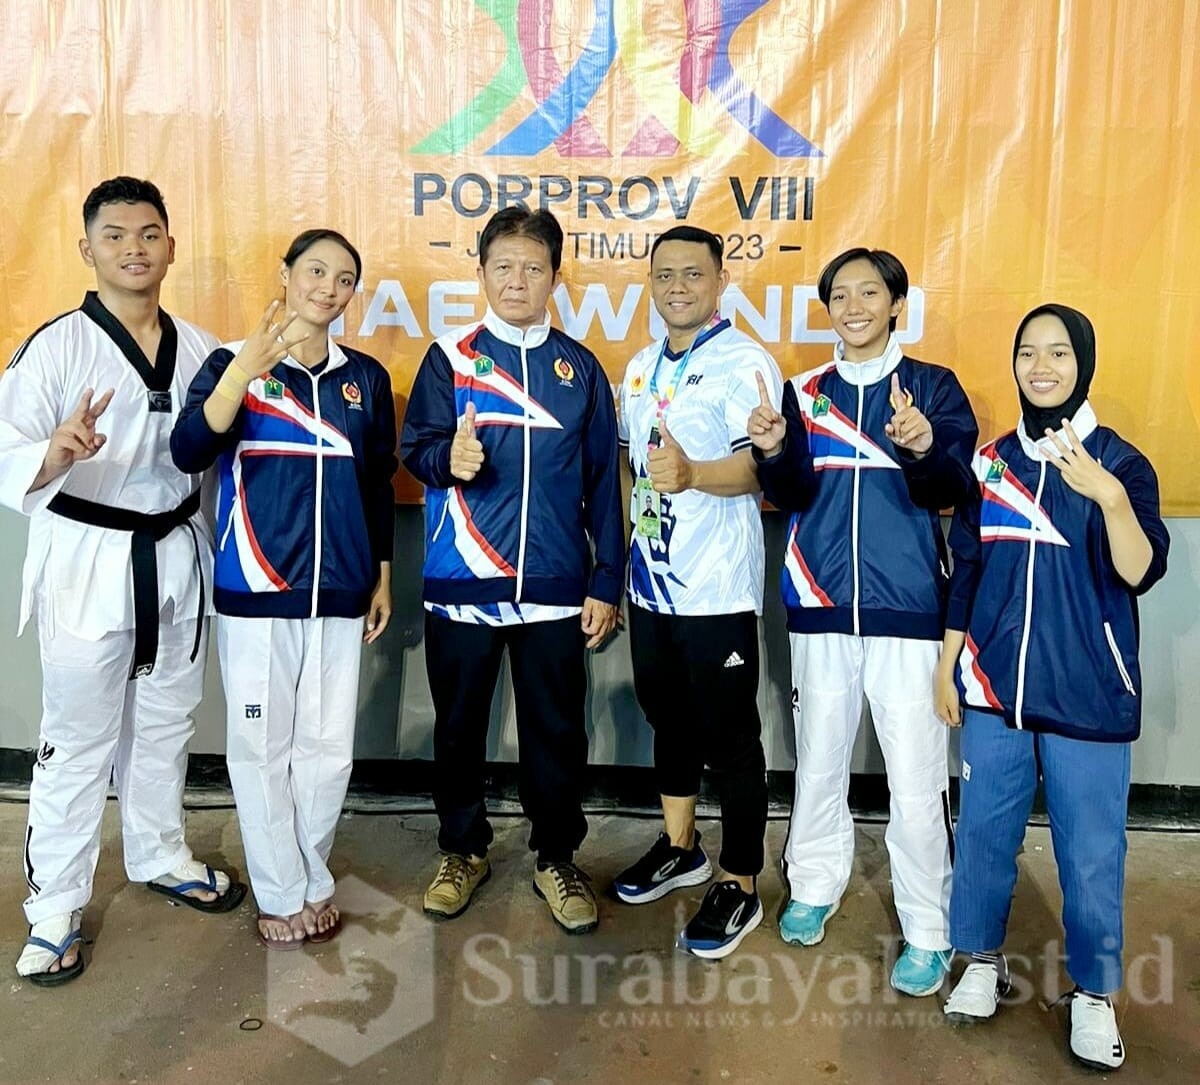 Atlet Taekwondo Kota Malang di ajang Porprov VIII Jatim